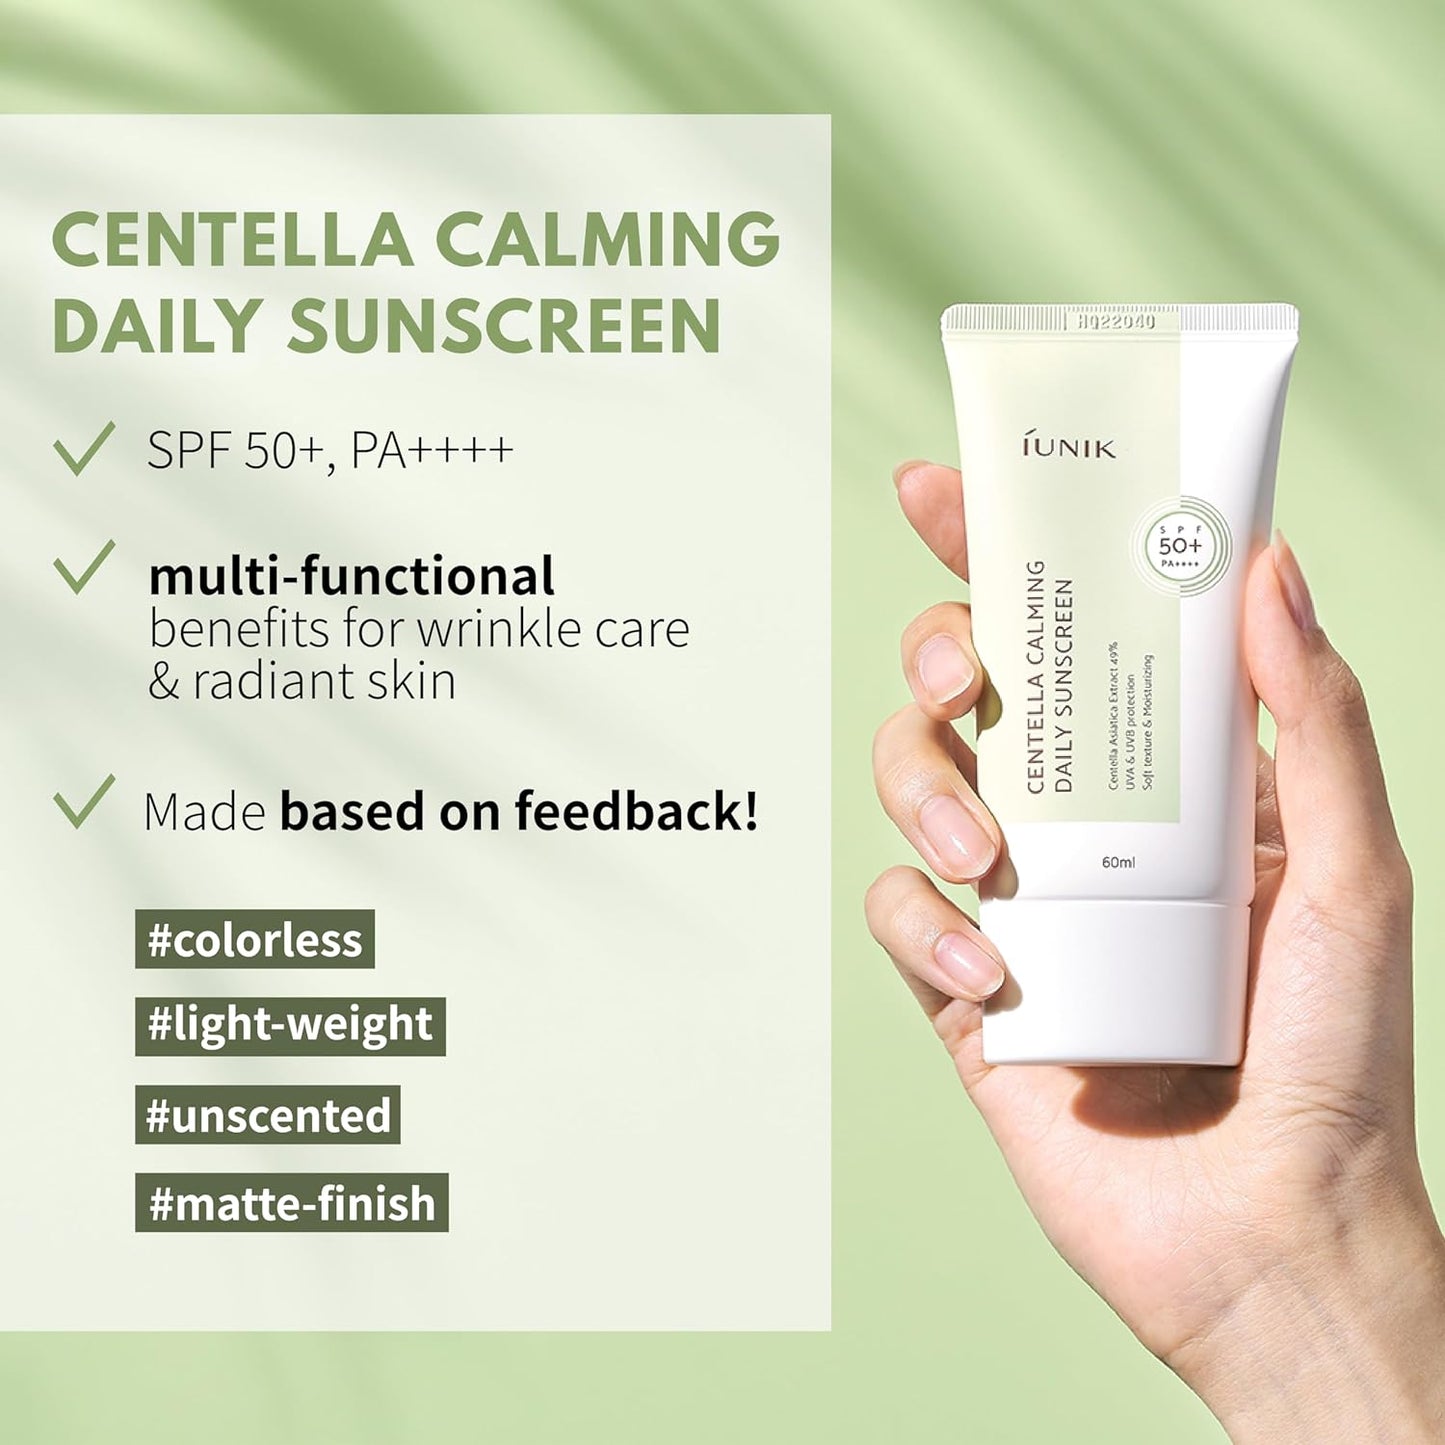 iUNIK Centella Calming Daily Sunscreen Mini